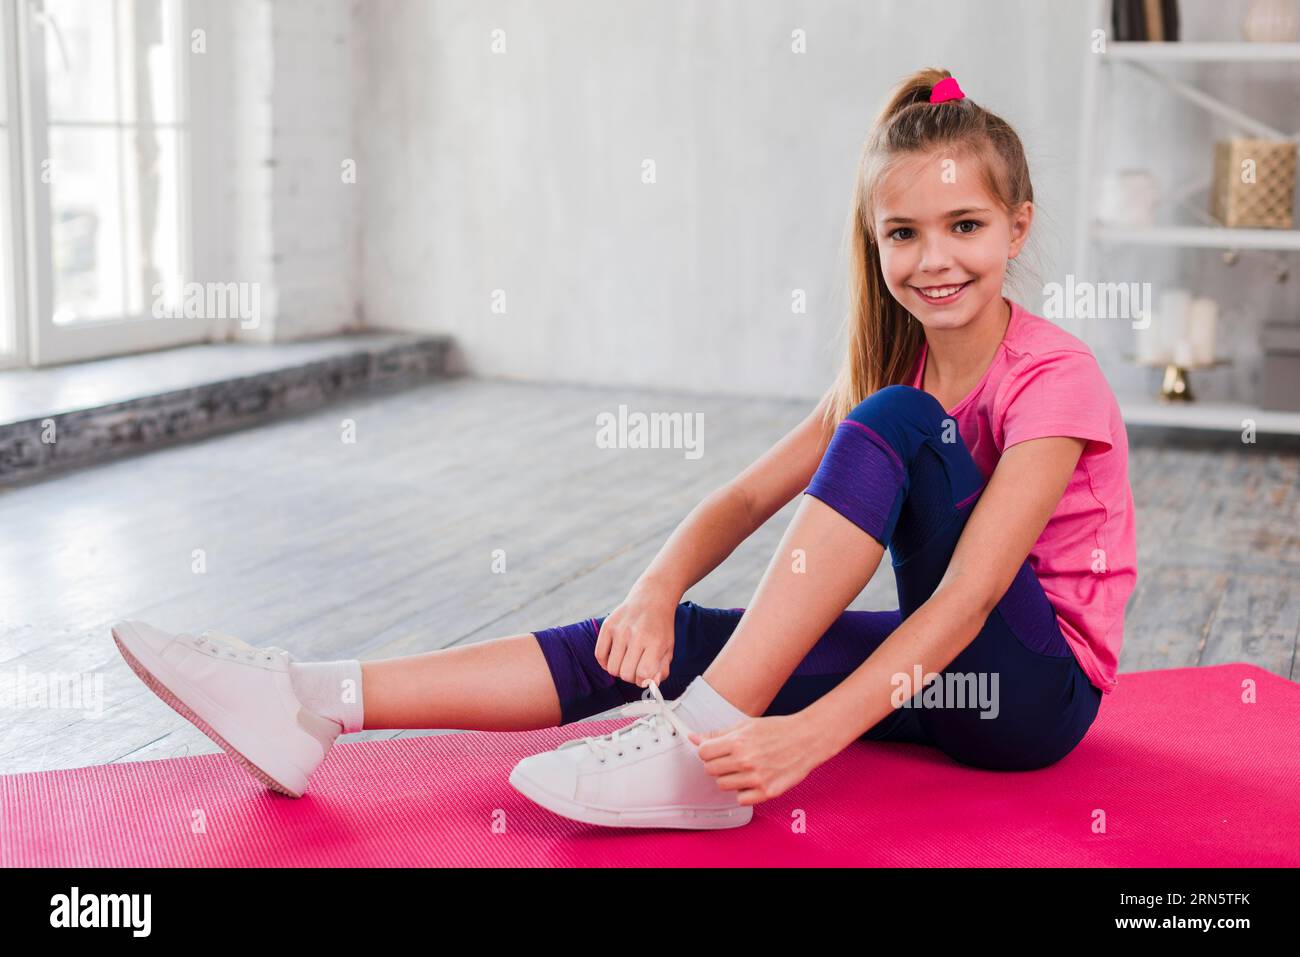 Portrait smiling girl sitting exercise mat tying her shoelace Stock Photo